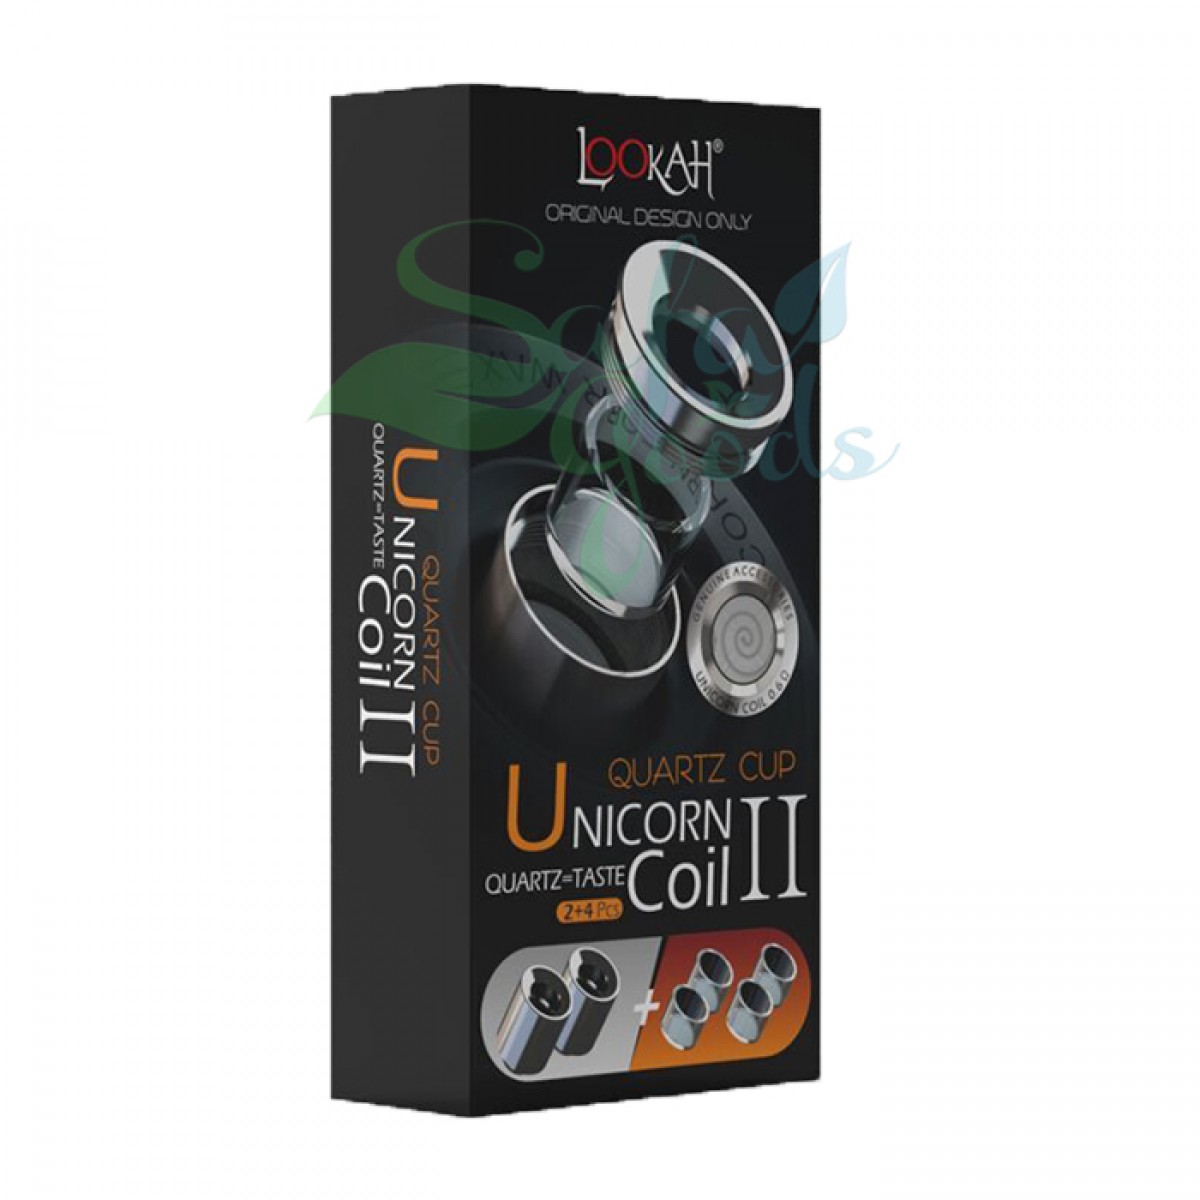 Lookah Unicorn Coil II - Quartz Cup 2pc